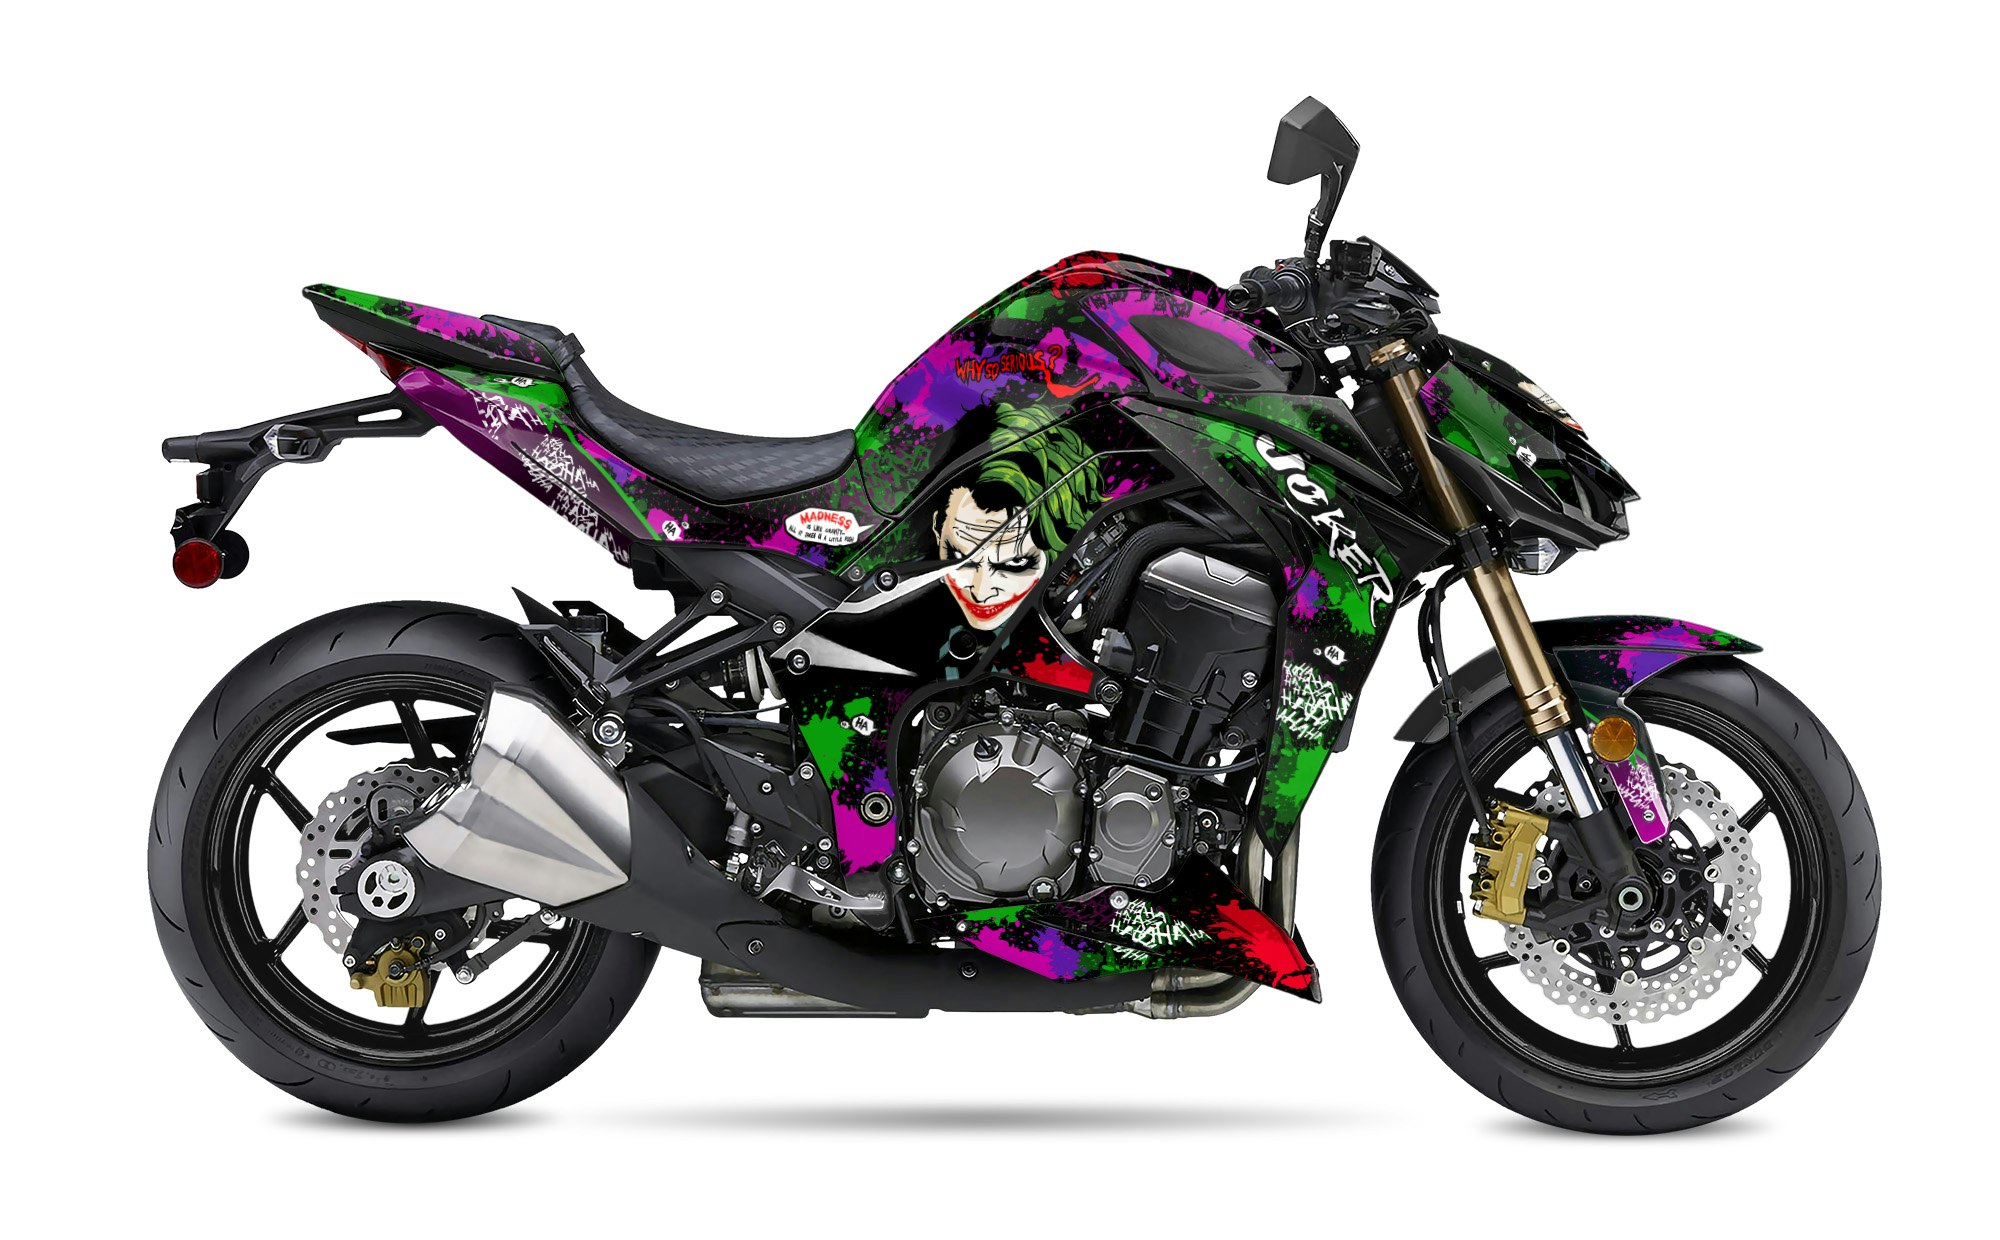 Joker Kit grafico - Adatto a Z1000 2007-2020